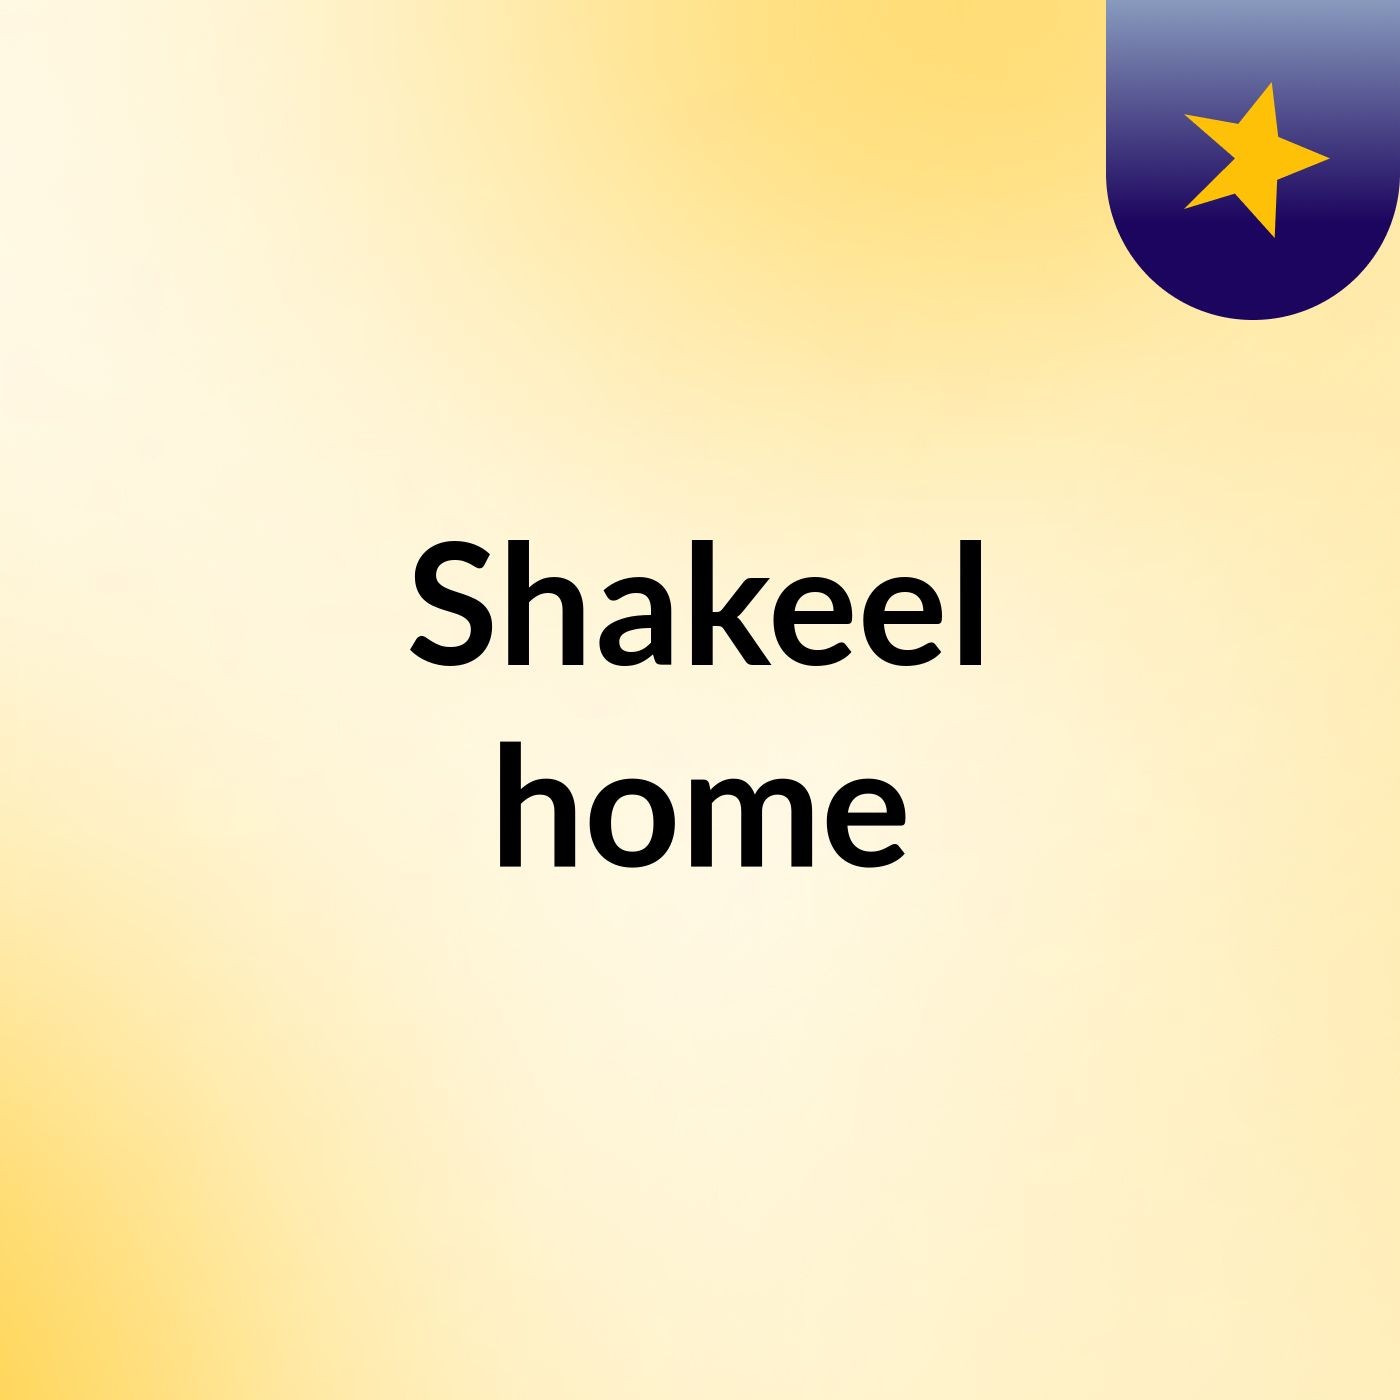 Shakeel home